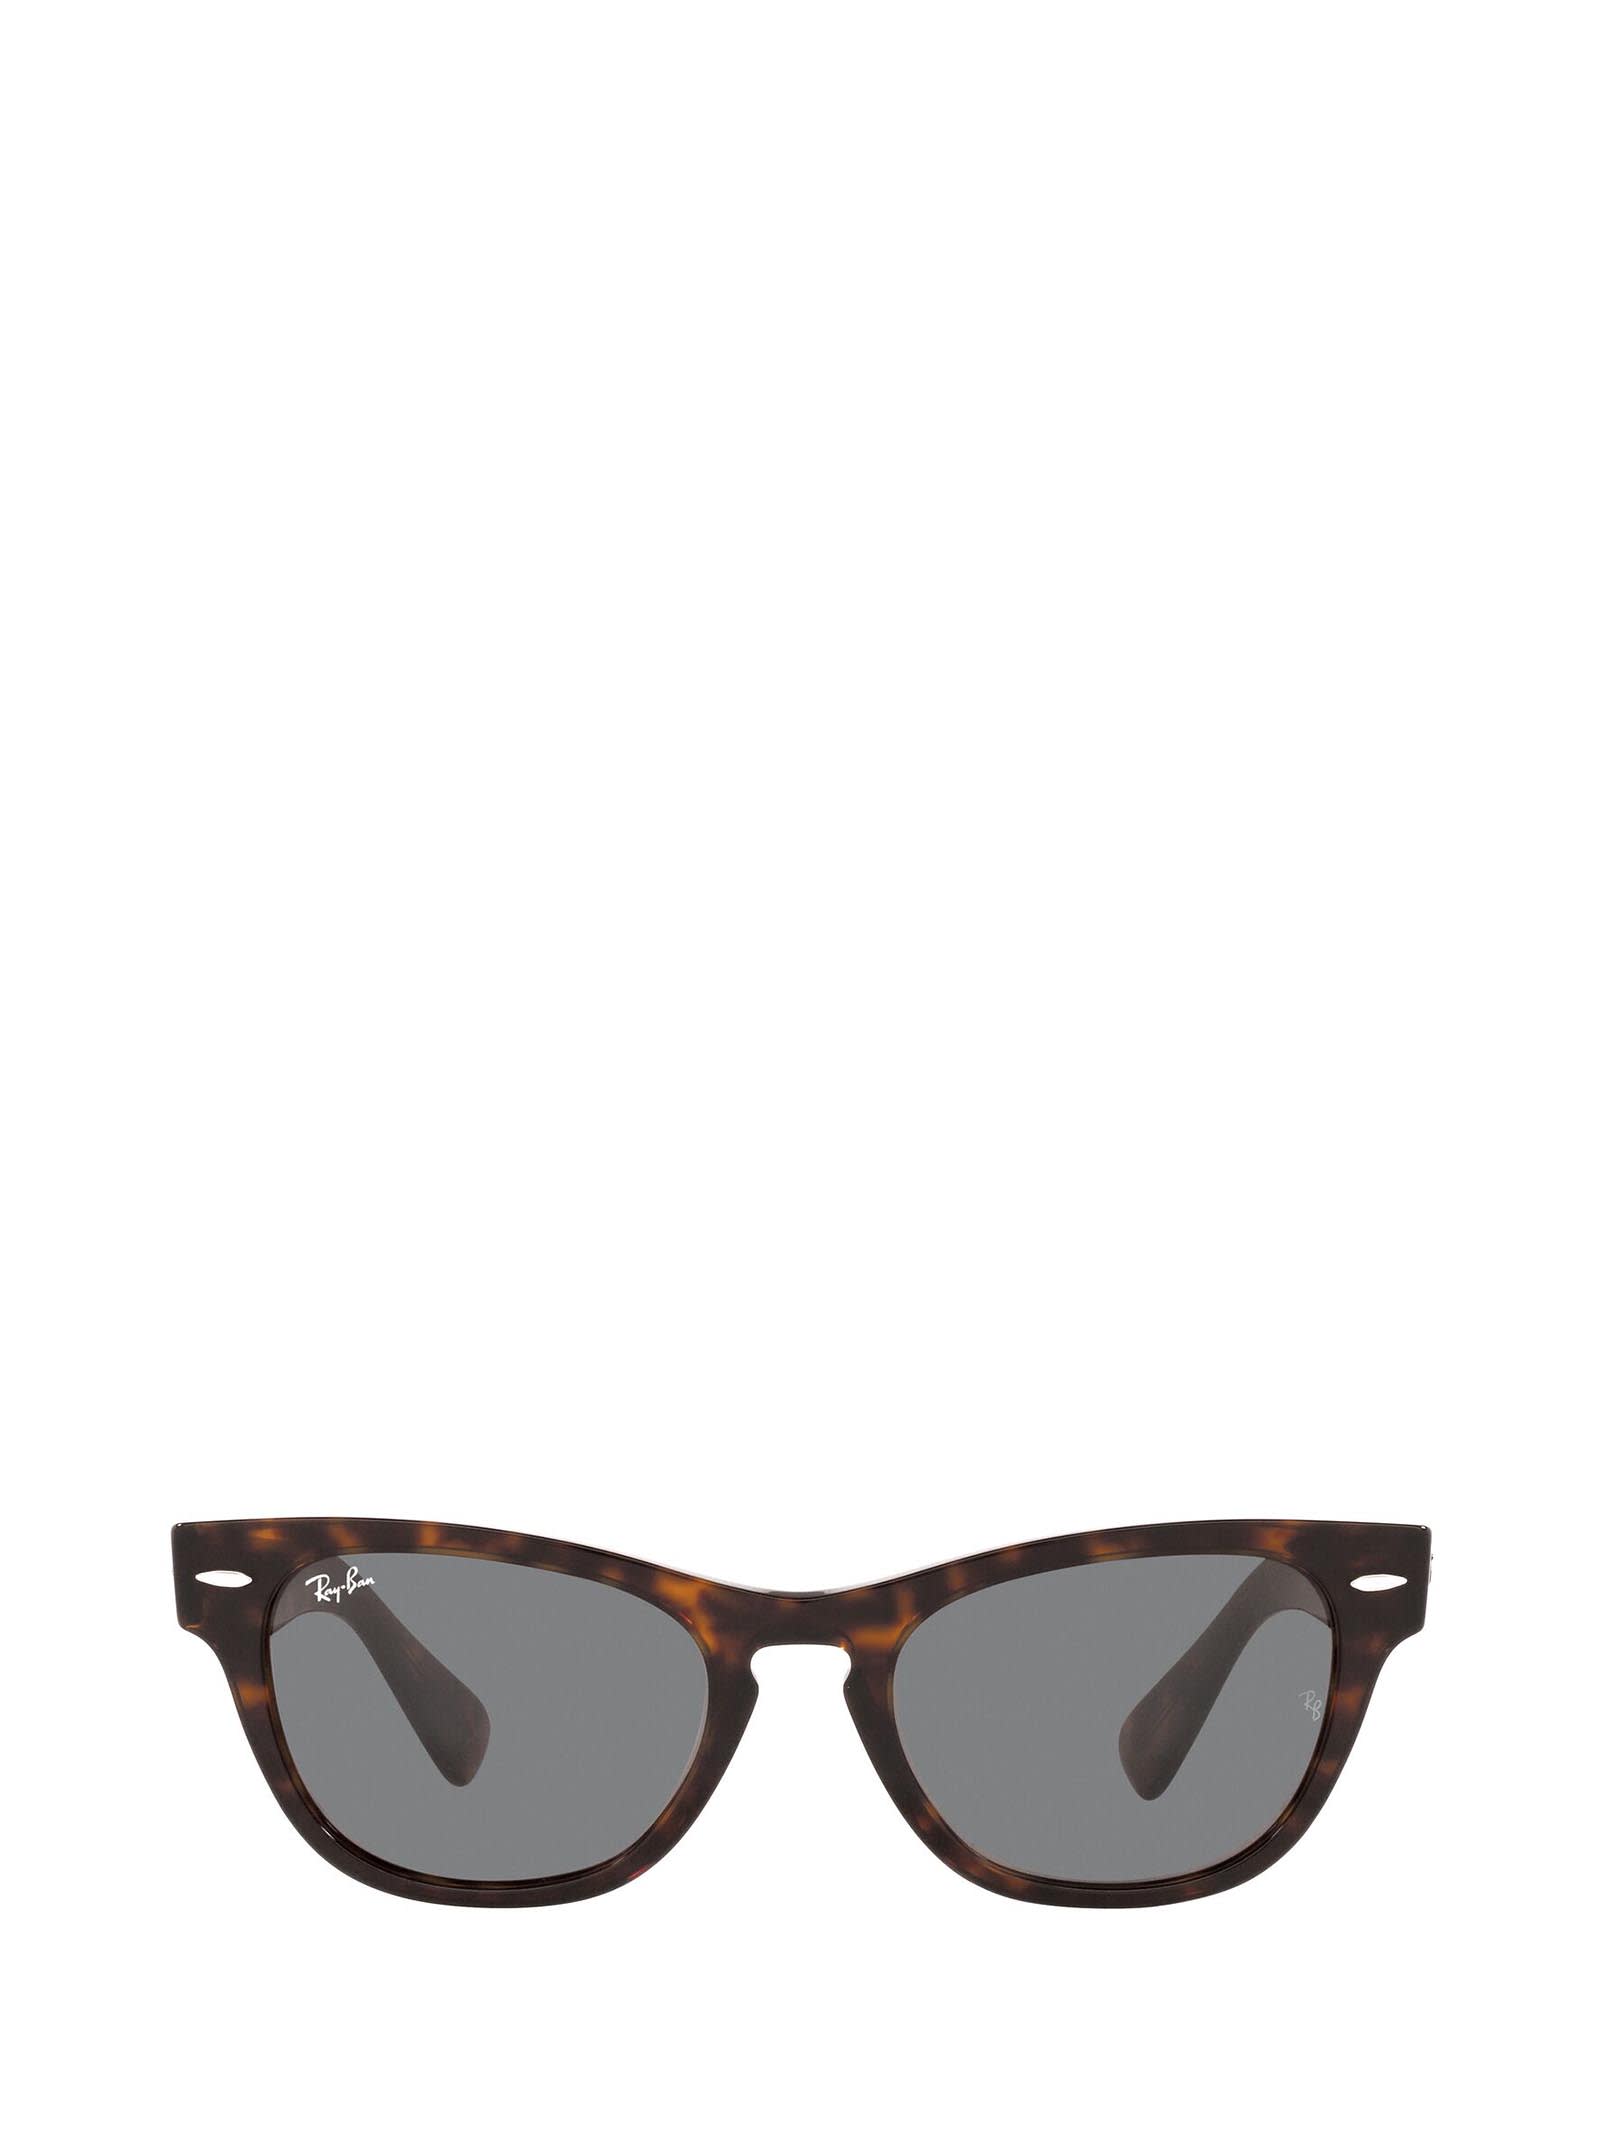 Ray-Ban Ray-ban Rb2201 Tortoise Sunglasses